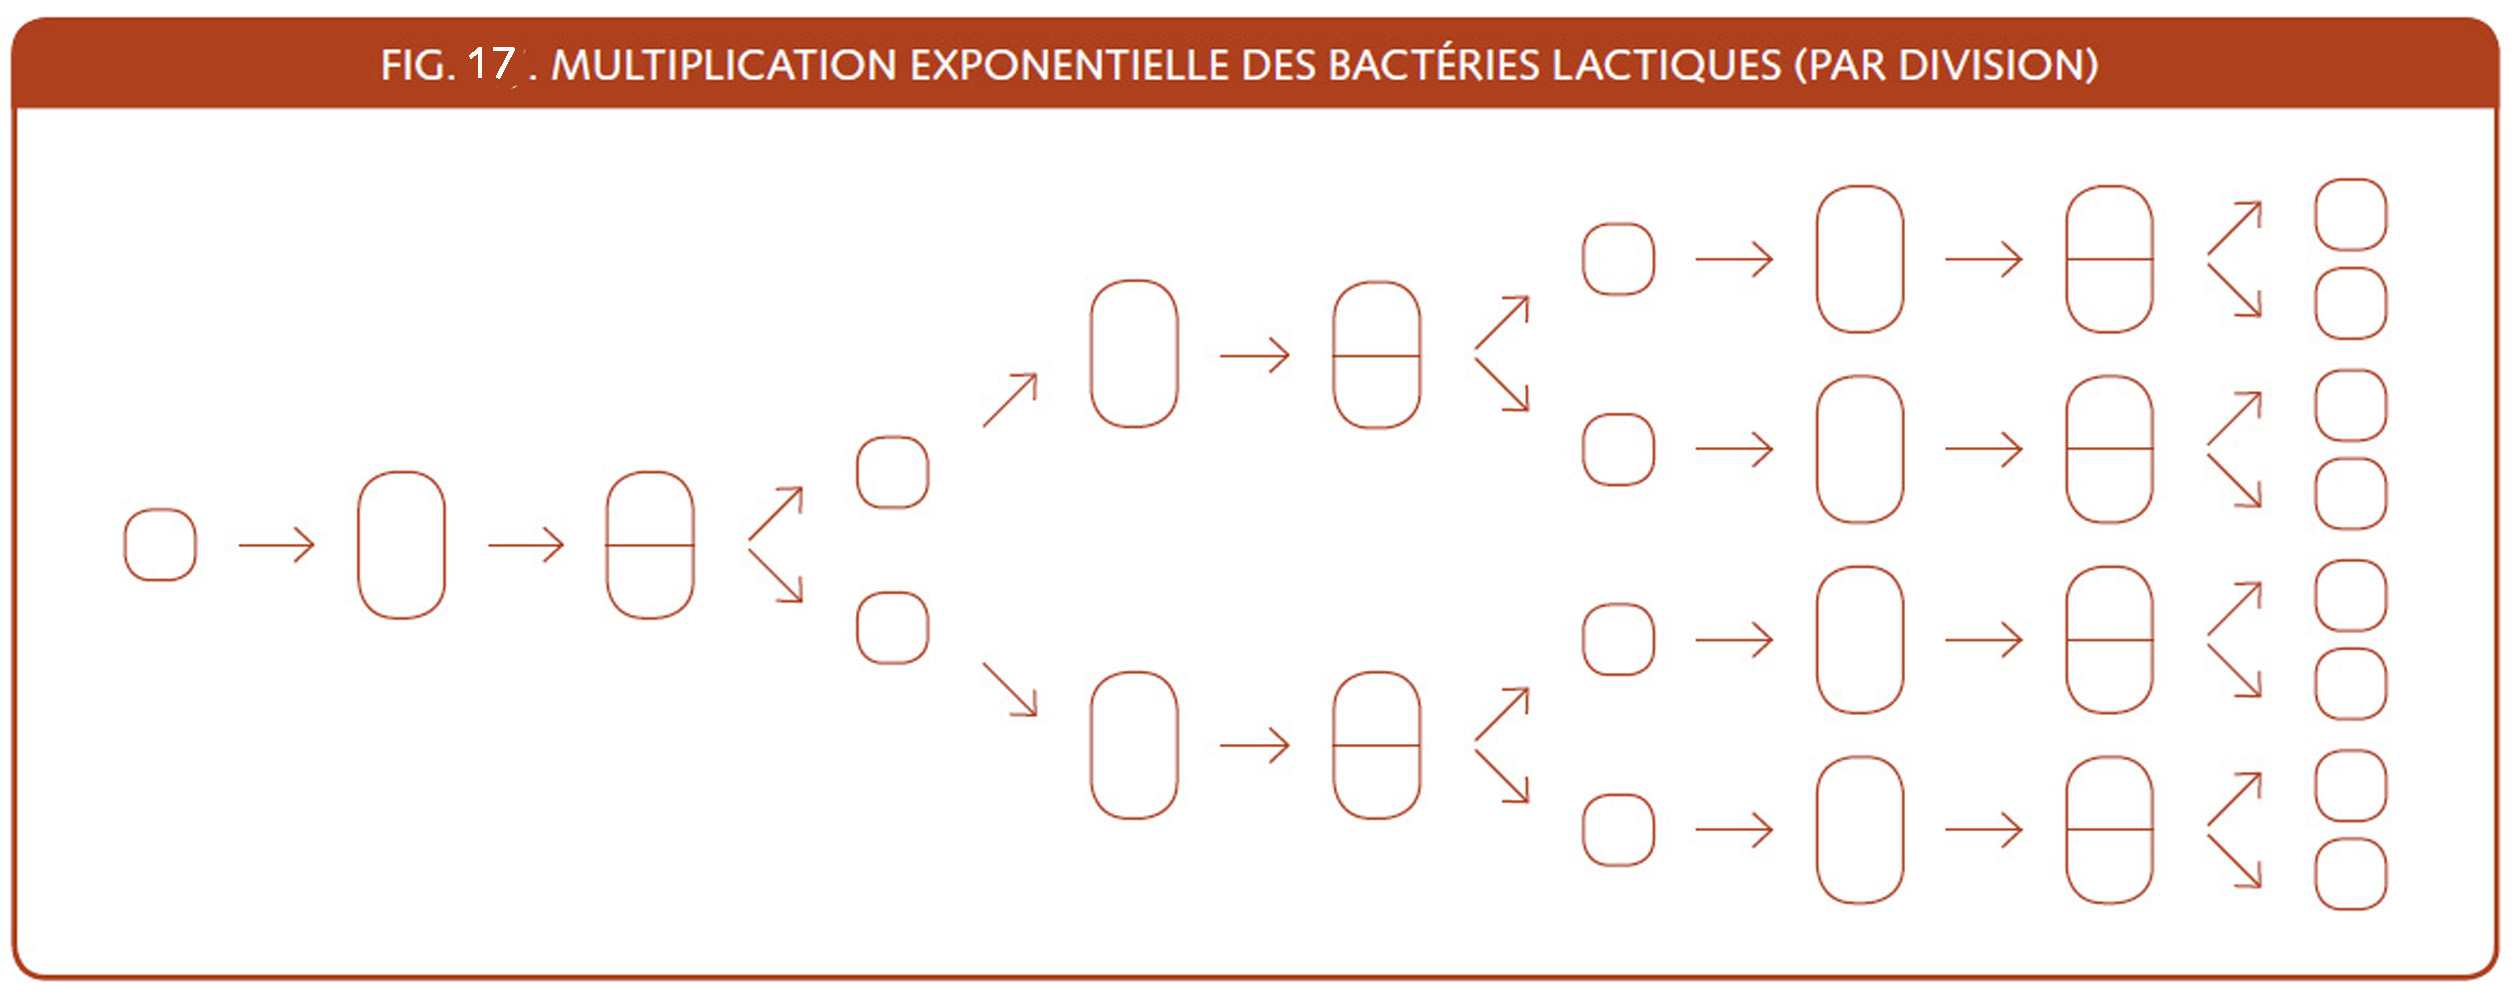 15_132_Multiplication exponentielle des bacteries.jpg